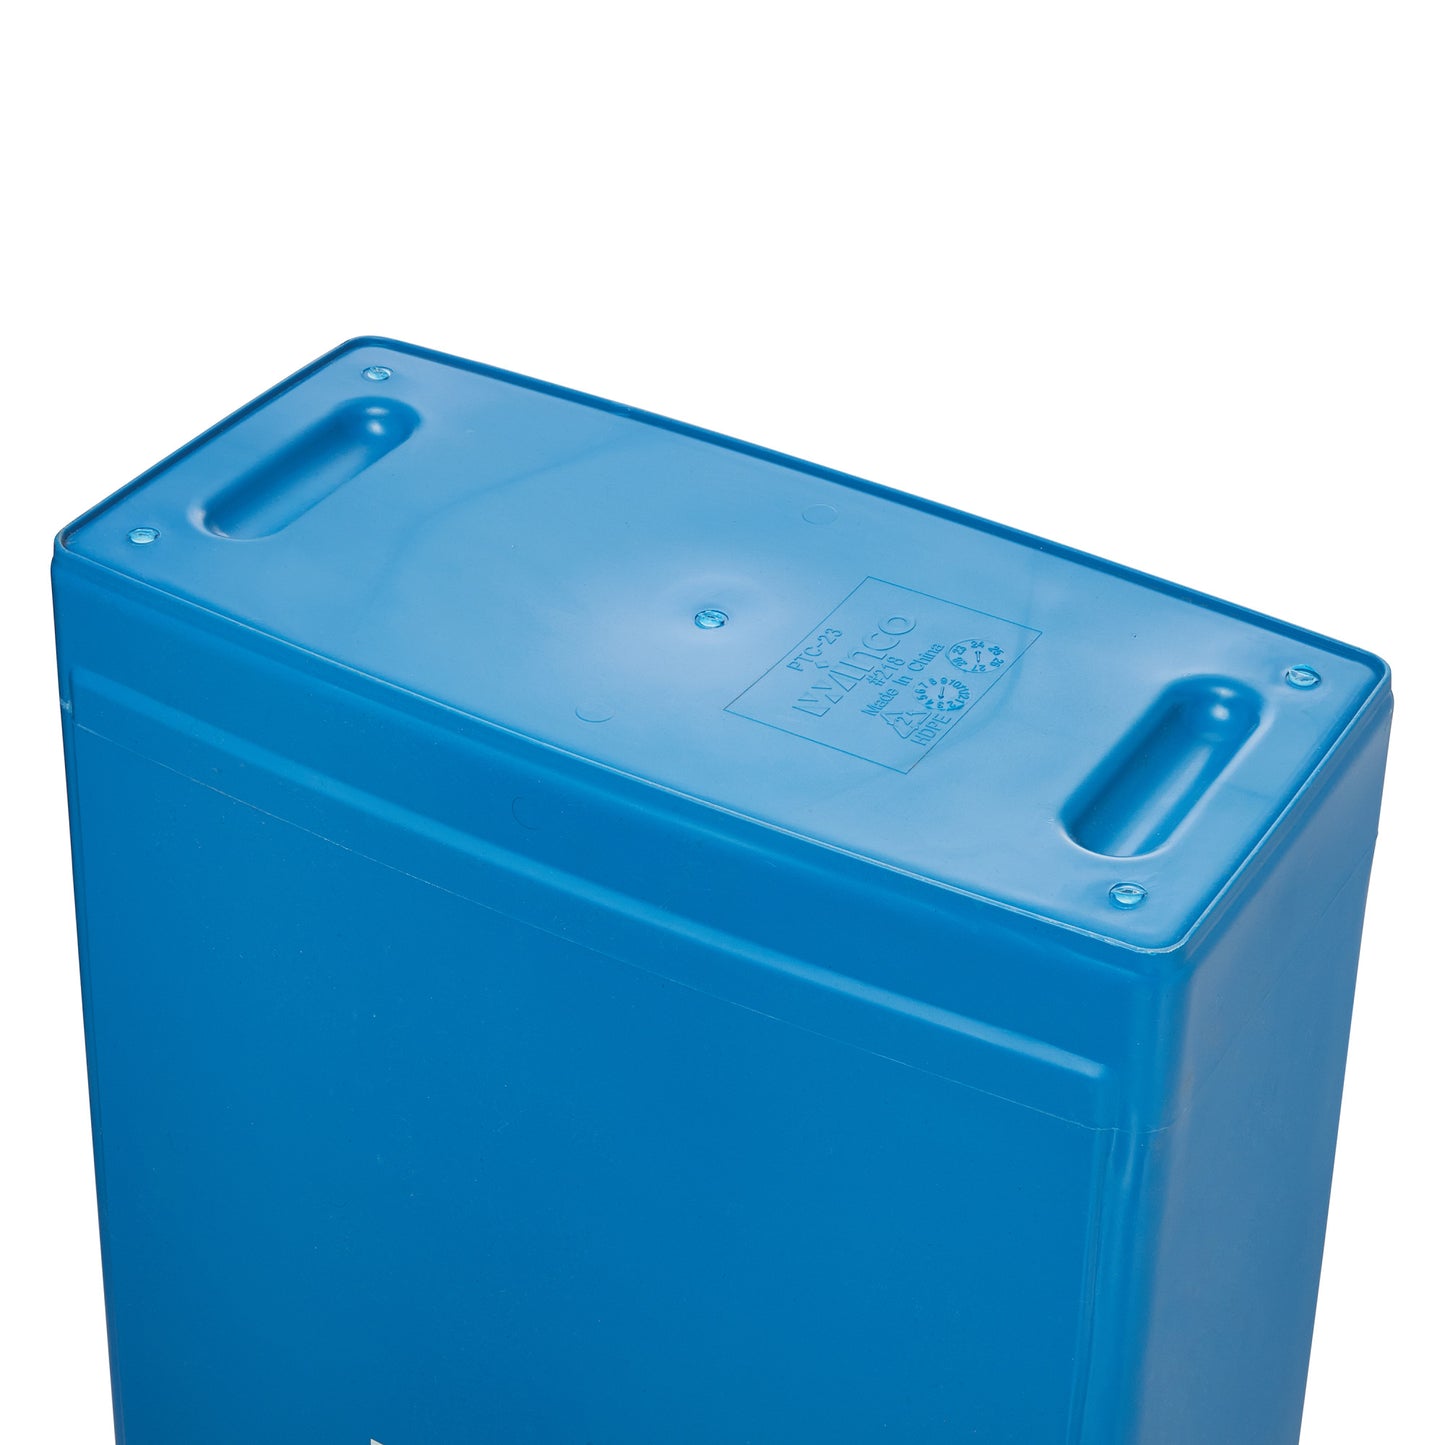 PTC-23L - 23 Gallon Slender Trash Can, Blue, Recycle